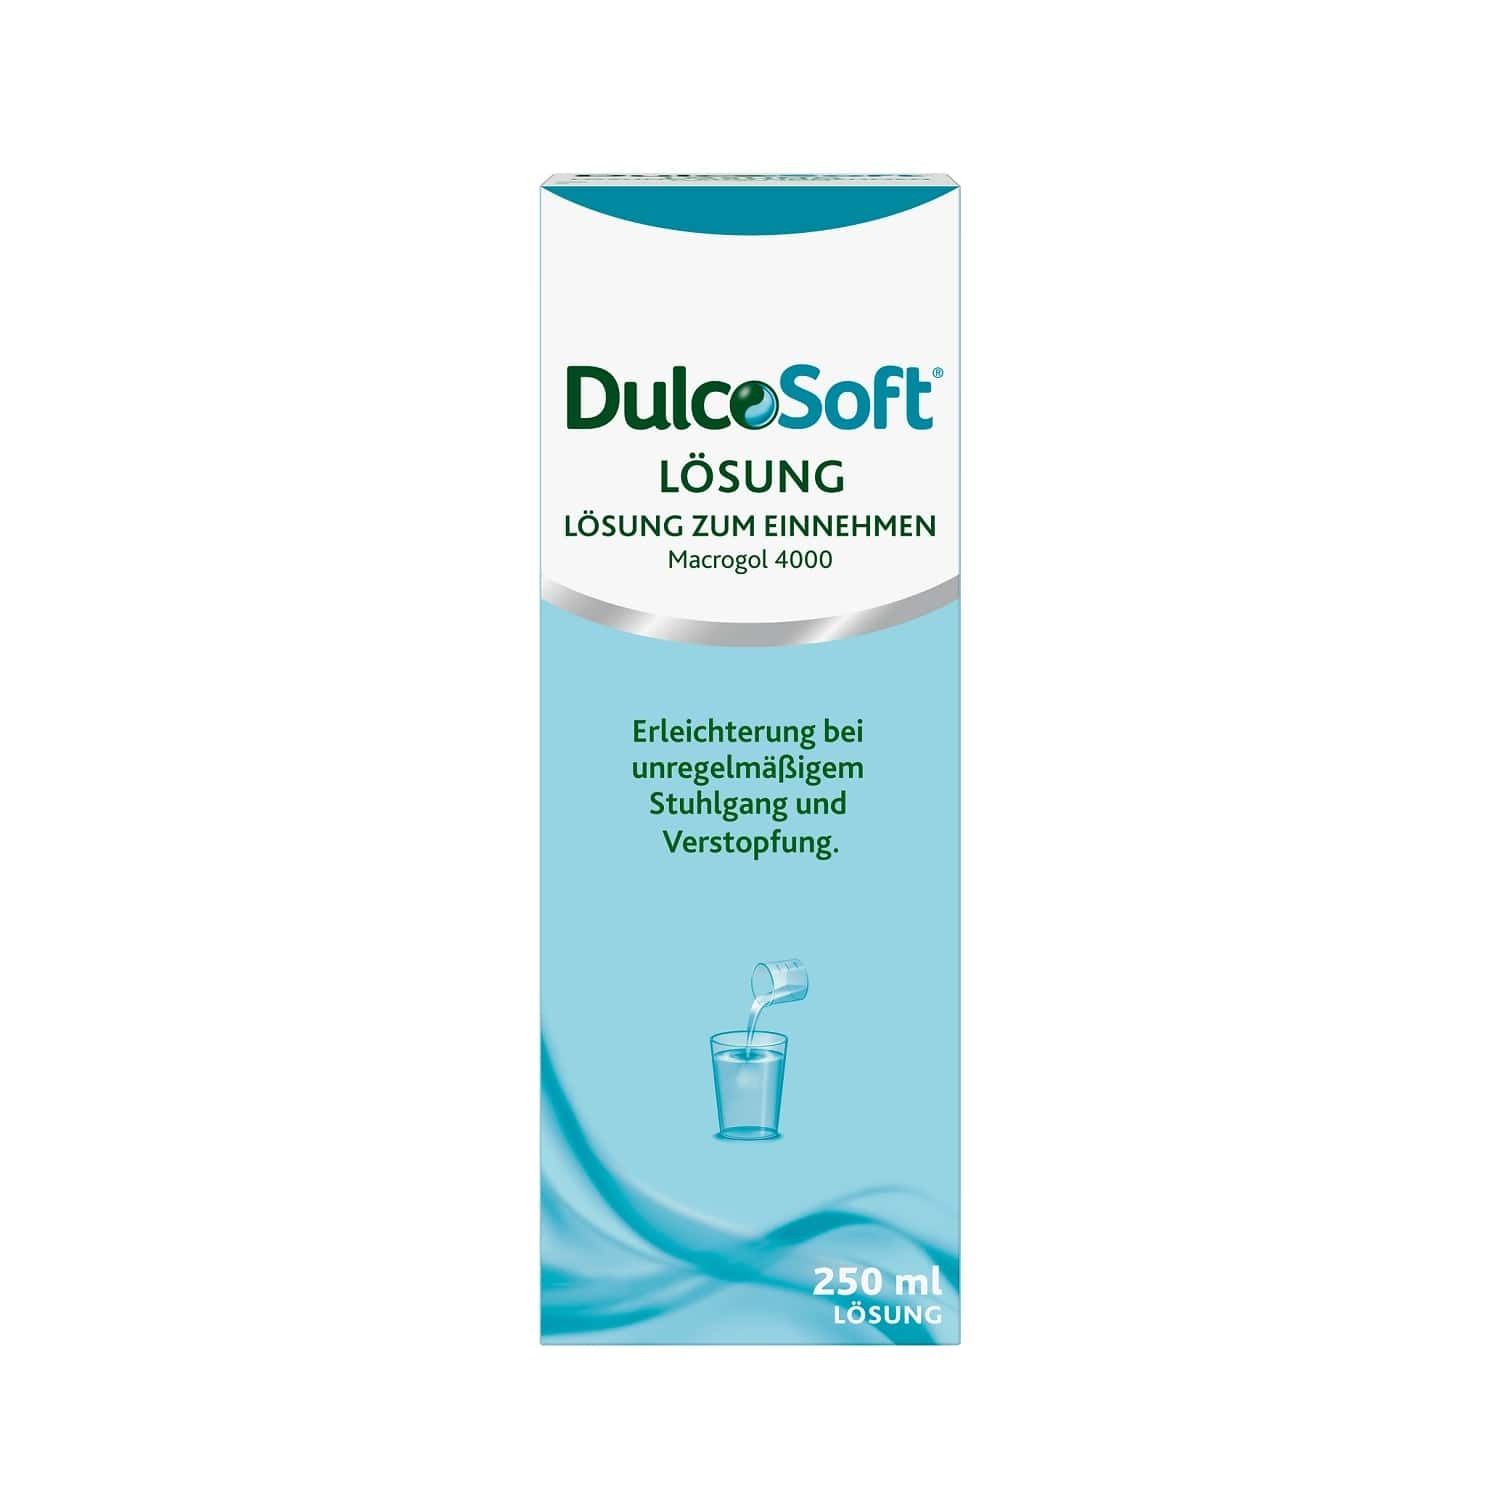 DulcoSoft® Lösung